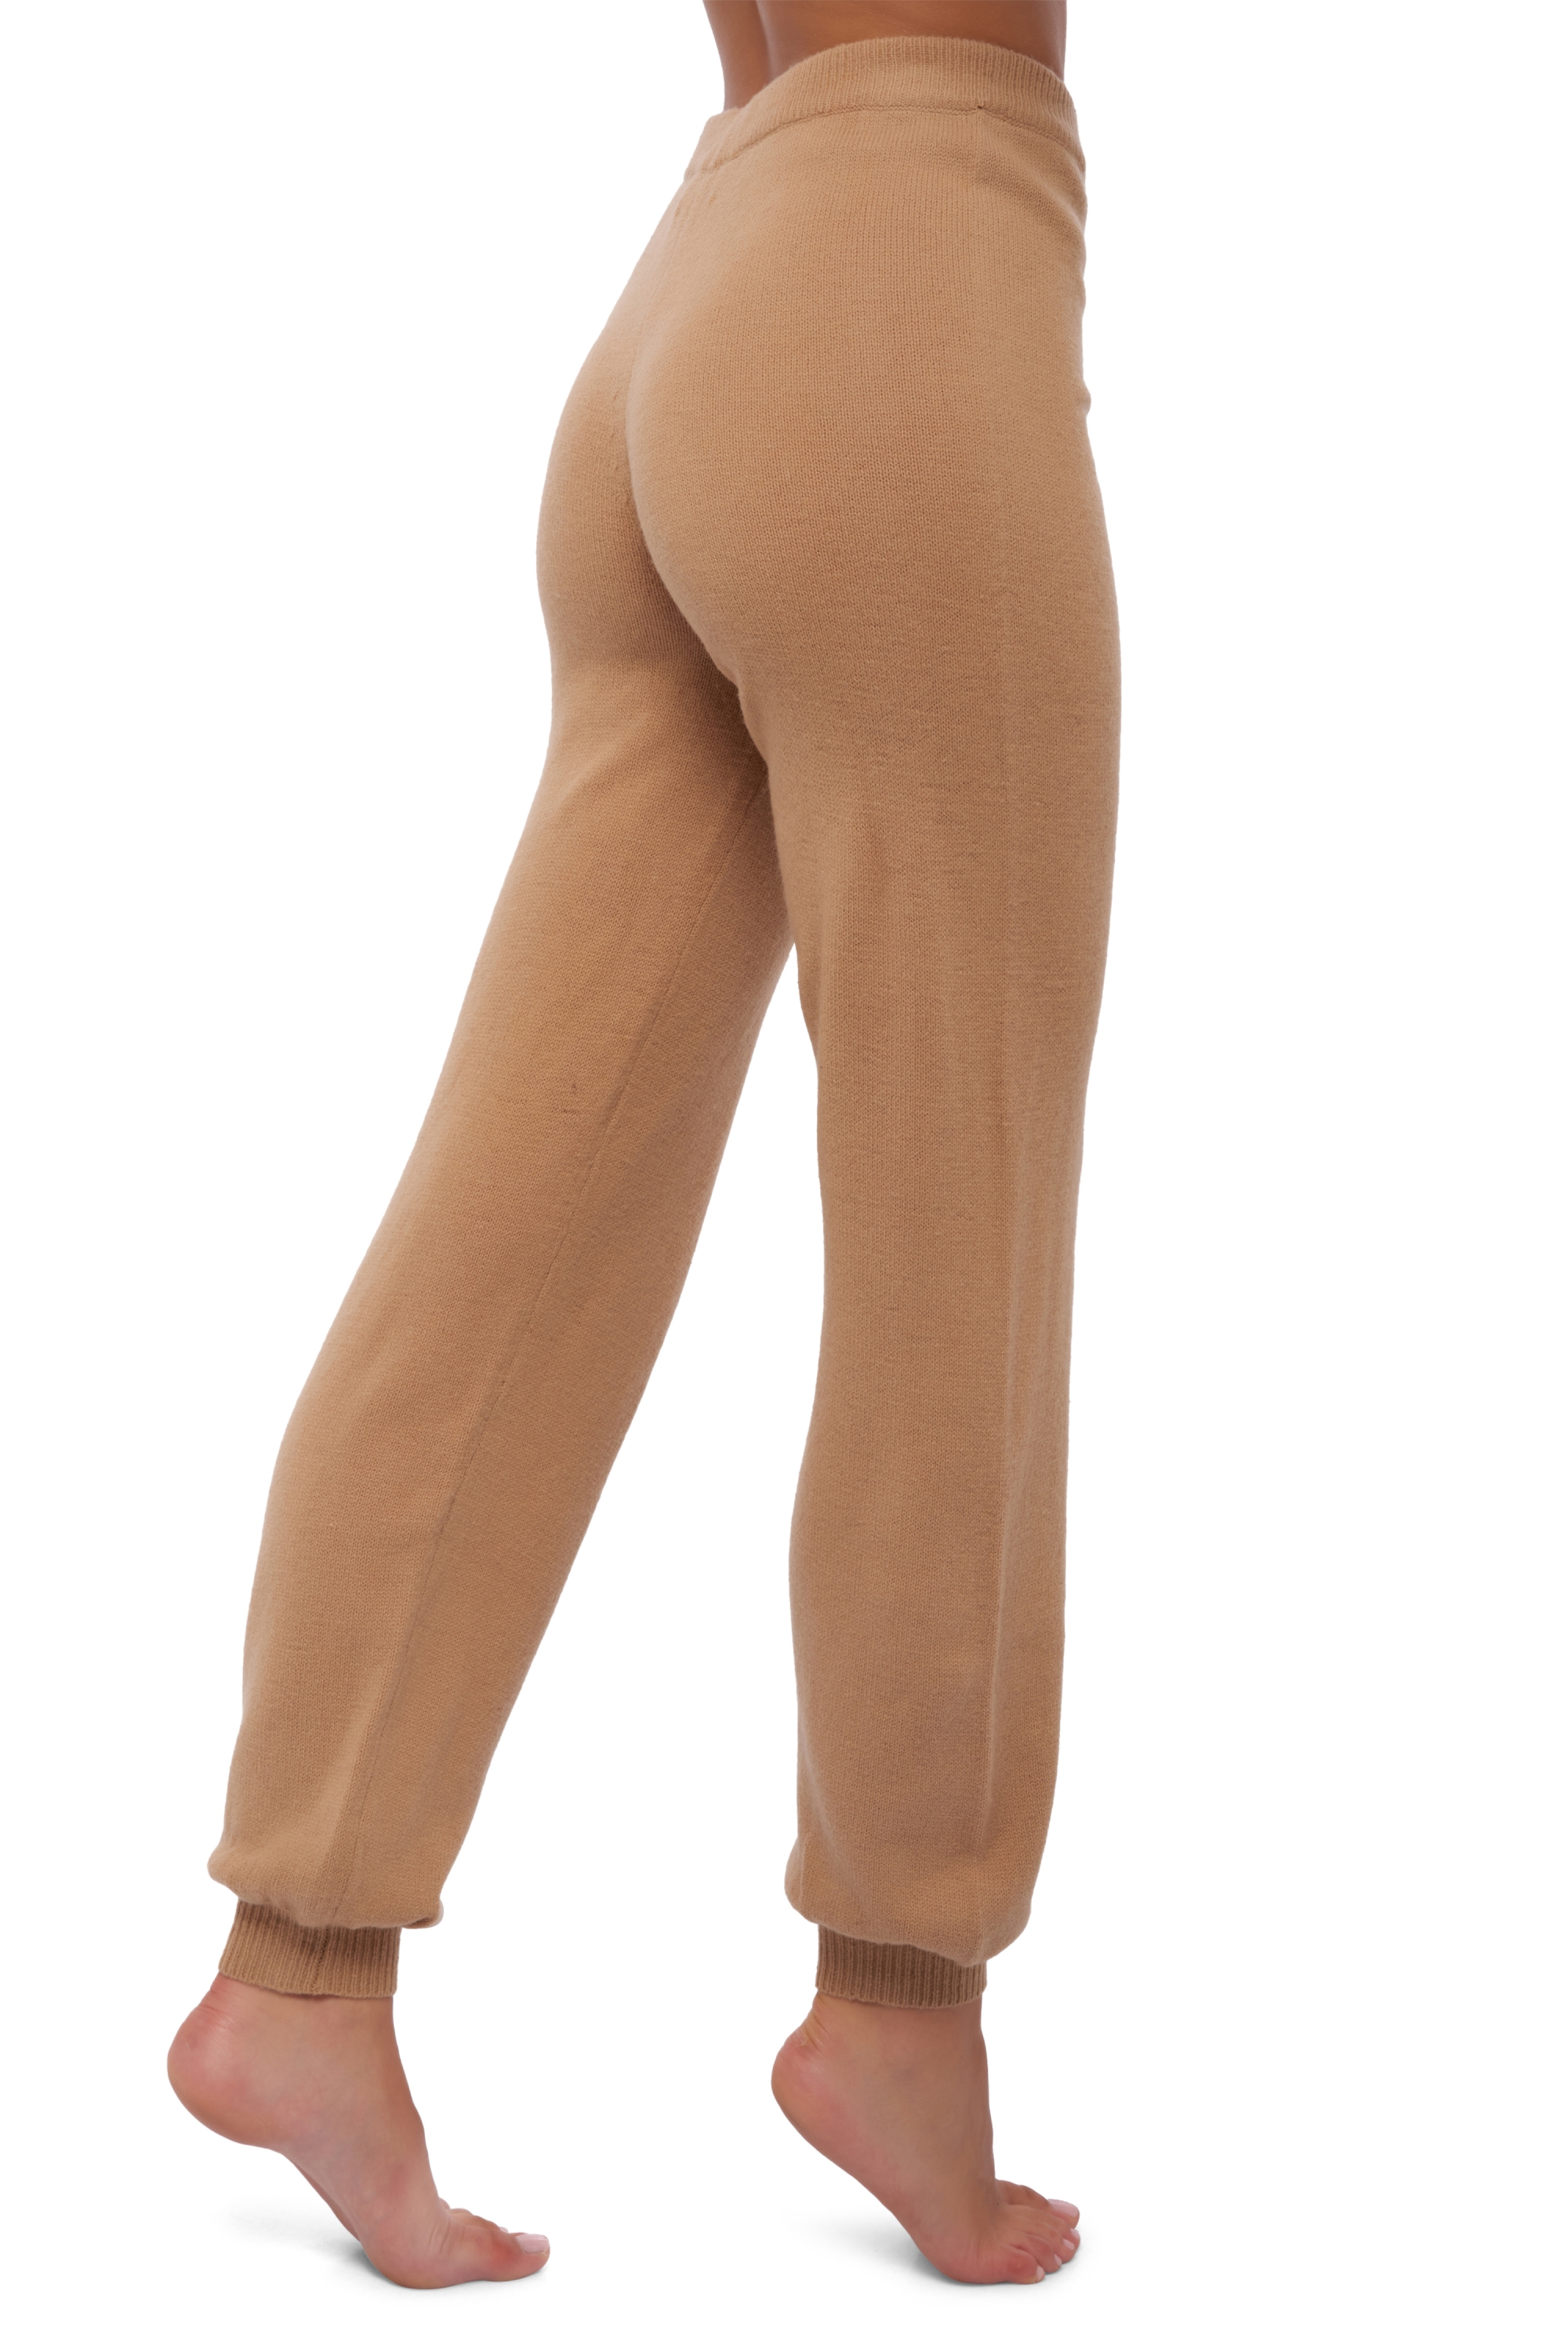 Yak cashmere donna pantaloni leggings zamora camello s